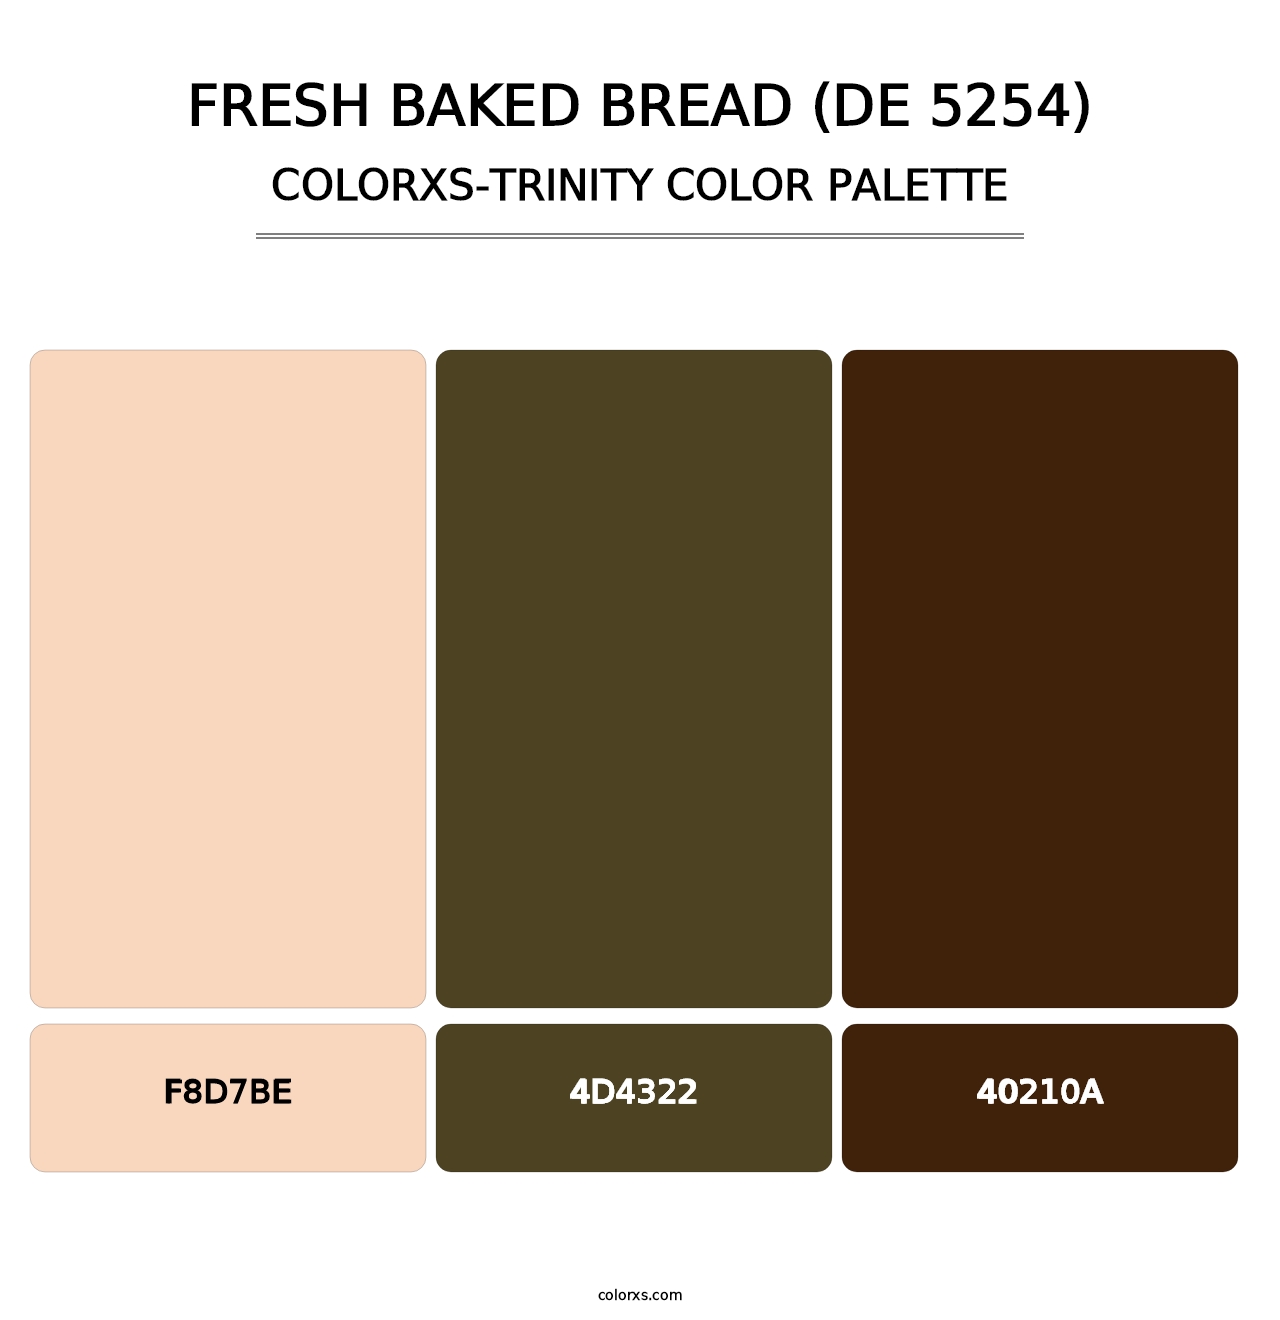 Fresh Baked Bread (DE 5254) - Colorxs Trinity Palette